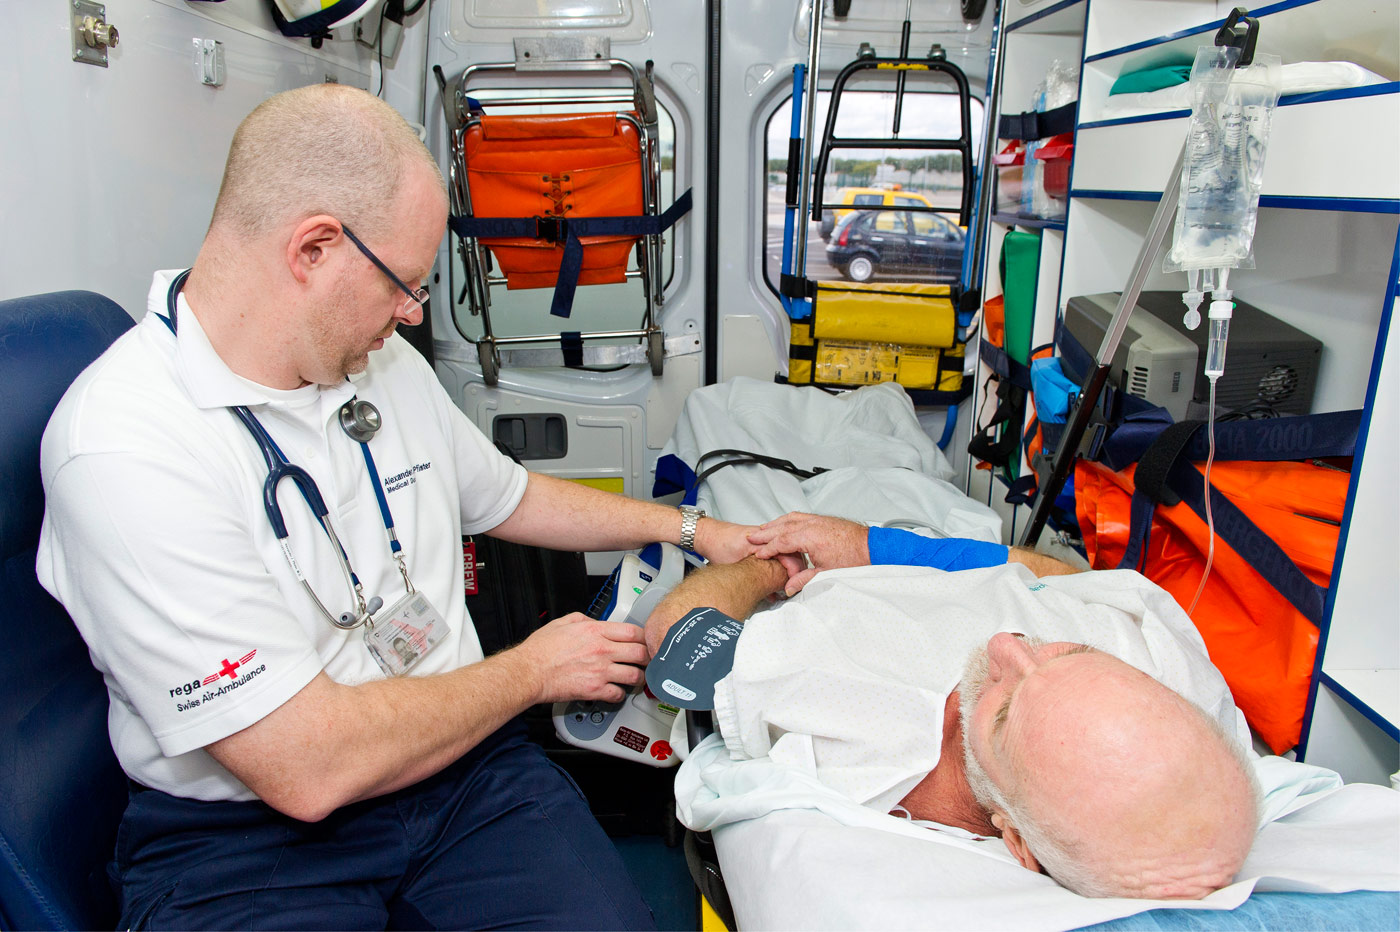 Rega Flight Physician supervises his patient with craniocerebral injury in the ambulance, Palma de Mallorca, Spain, 2012